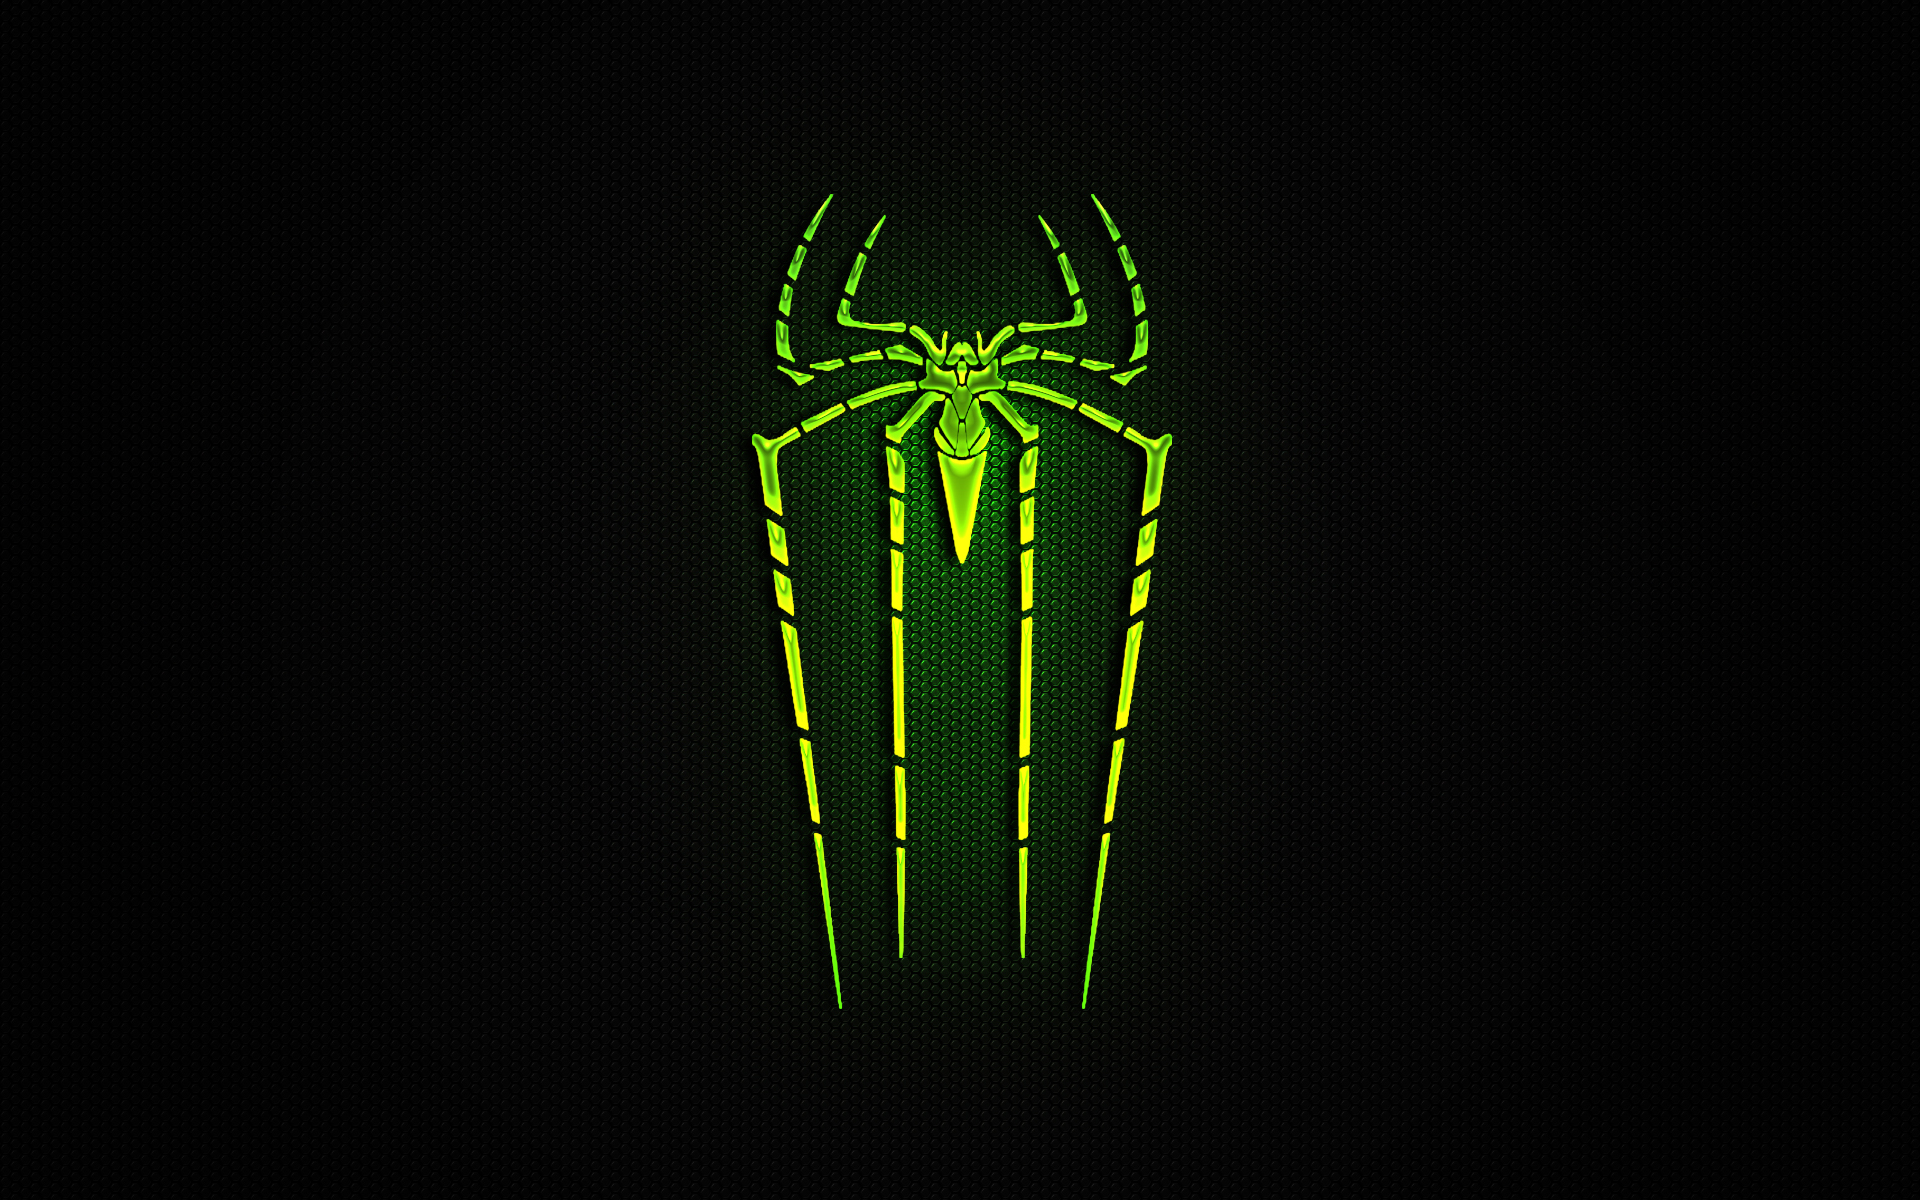 HD Spiderman Logo Wallpaper 71 images